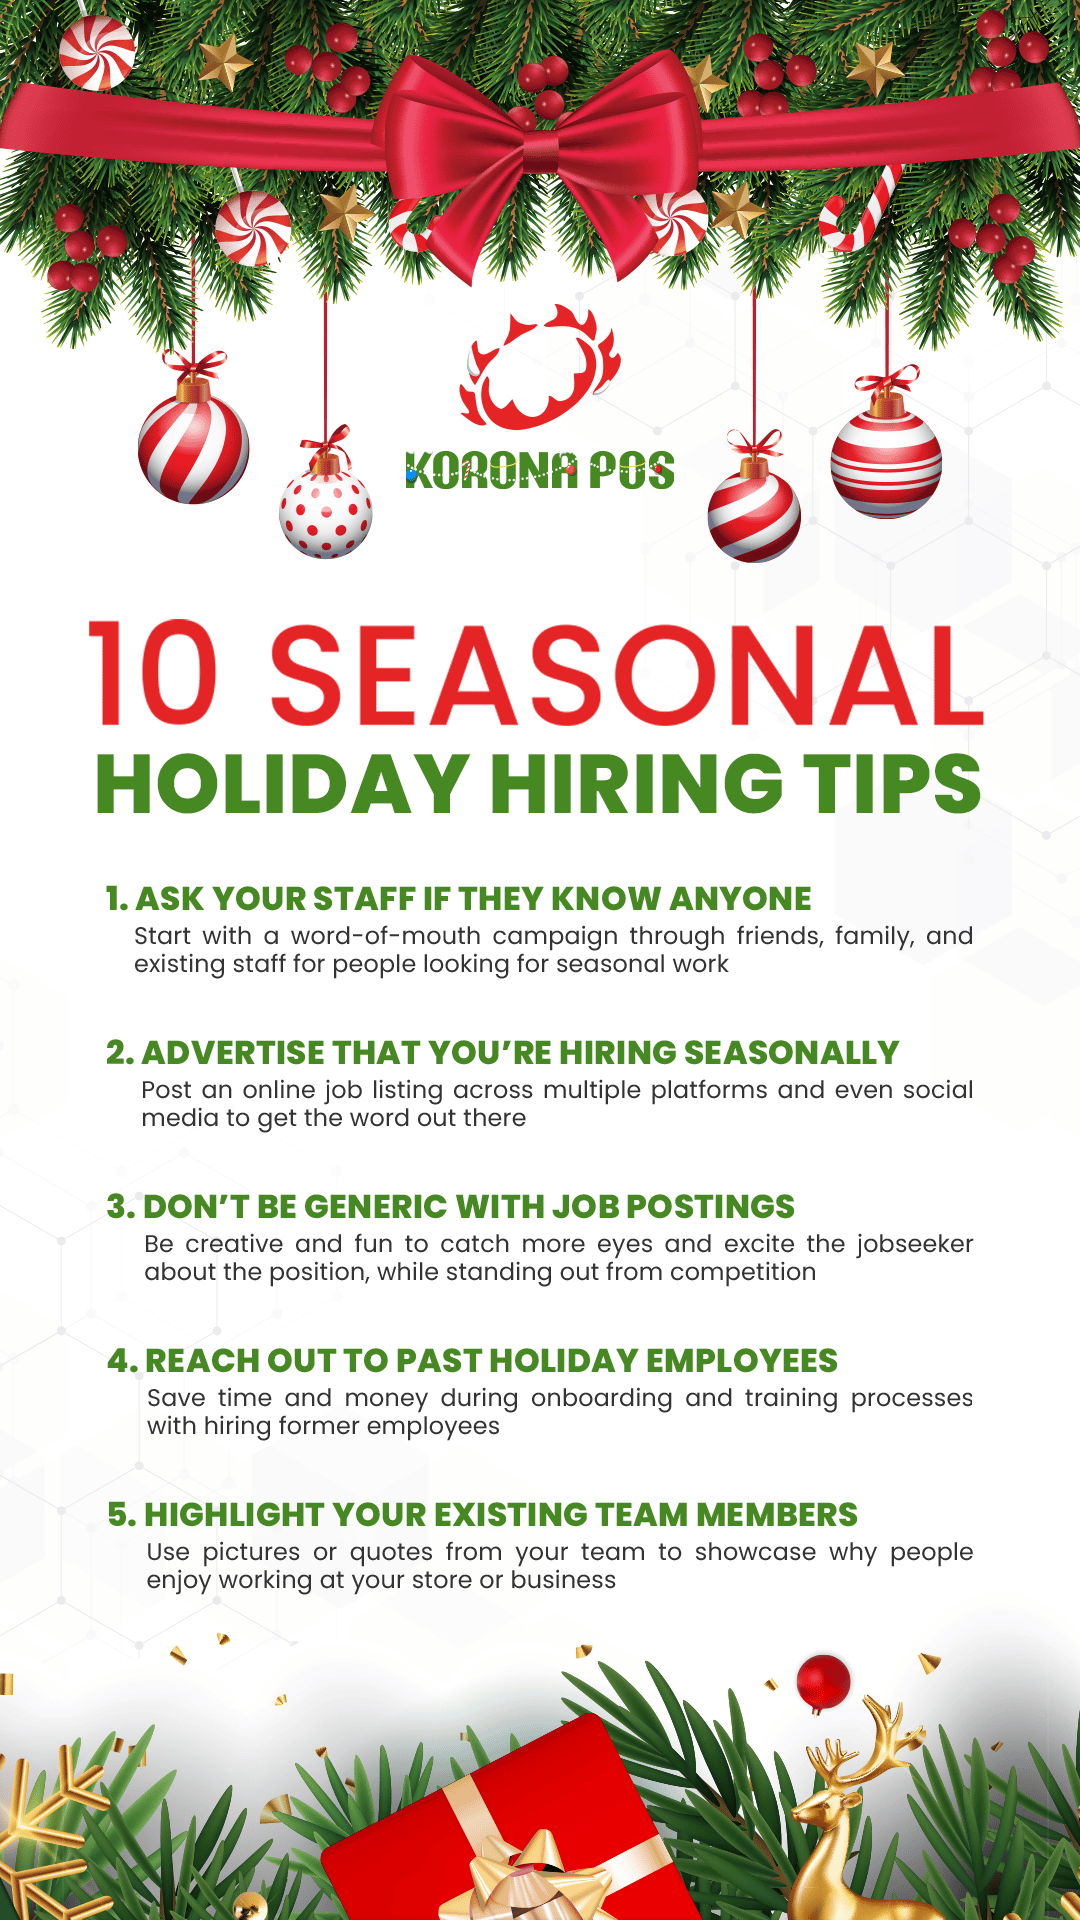 Tips 1-5 on seasonal holiday hiring